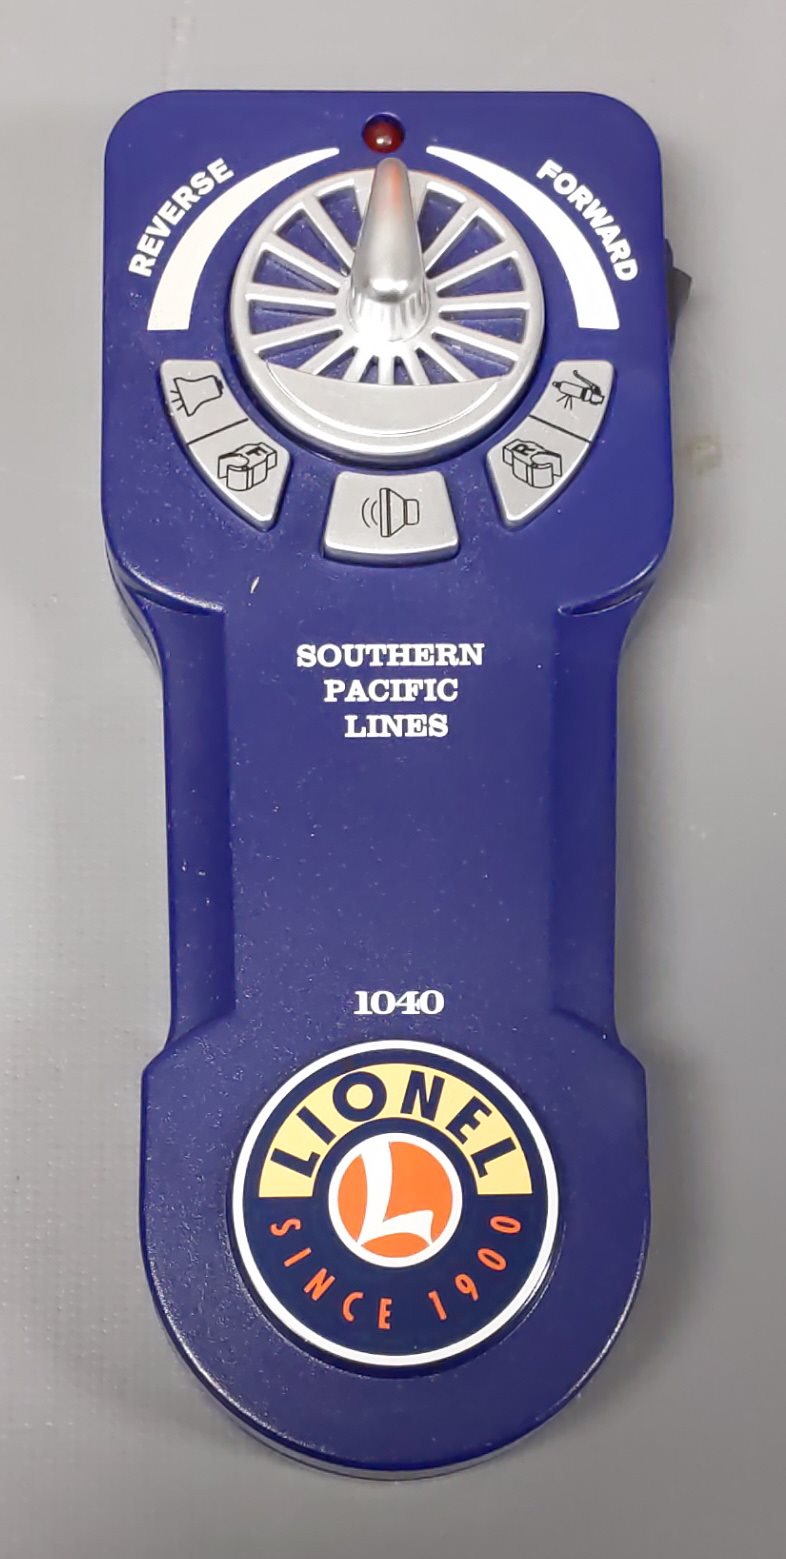 Lionel 6-82974 O Southern Pacific LionChief Plus A5 0-4-0 Steam Locomotive #1040